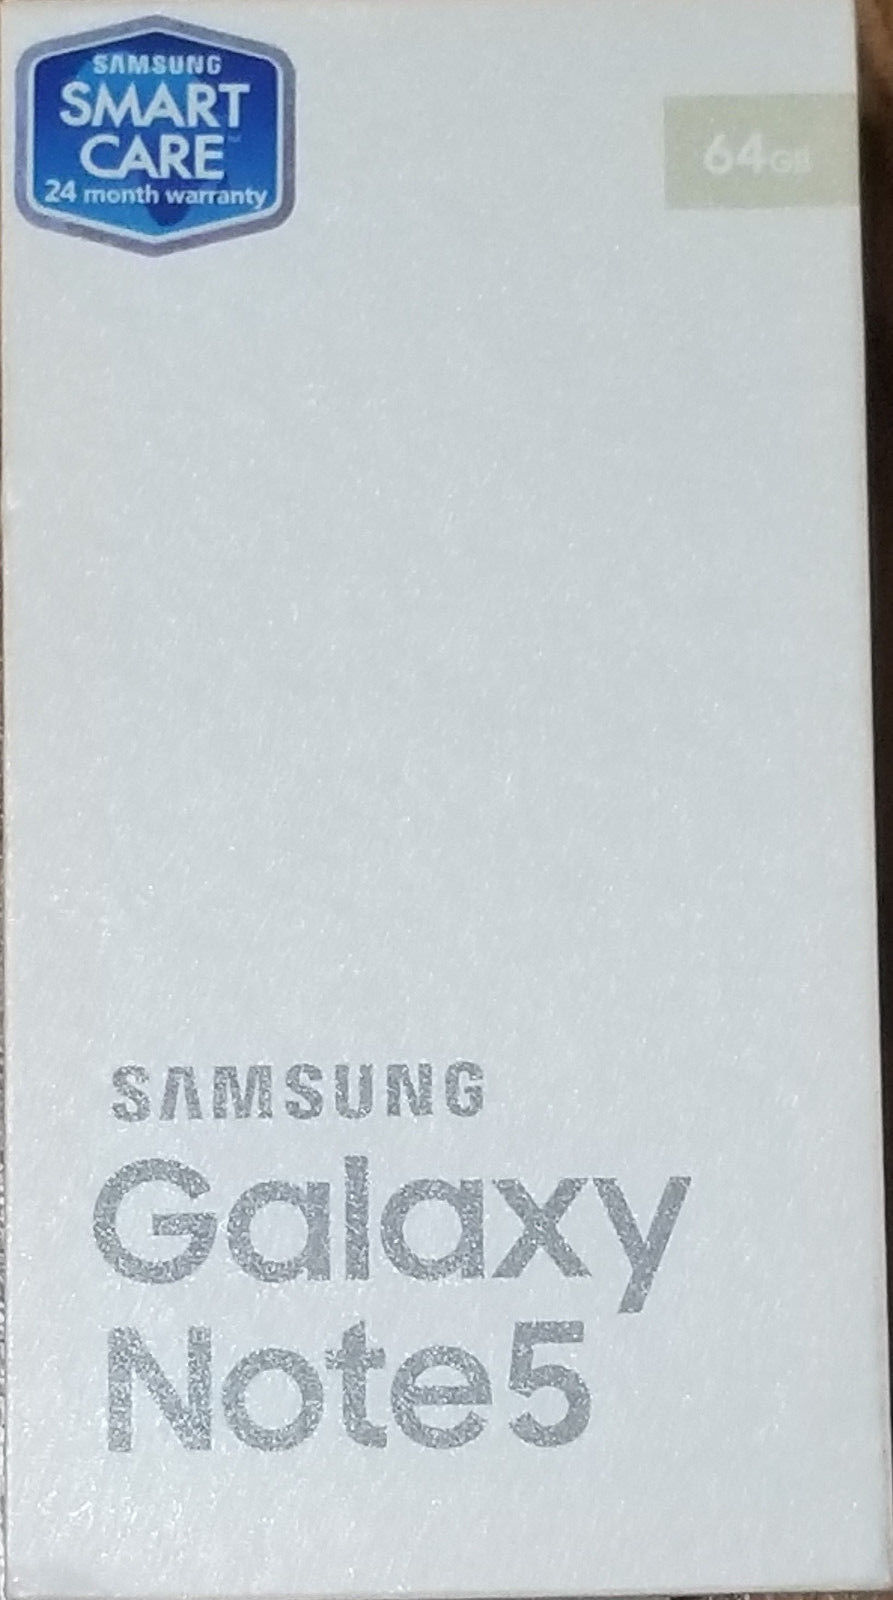 Samsung Galaxy Note 5 Unlocked 64GB + Accessories !!! - $299.99